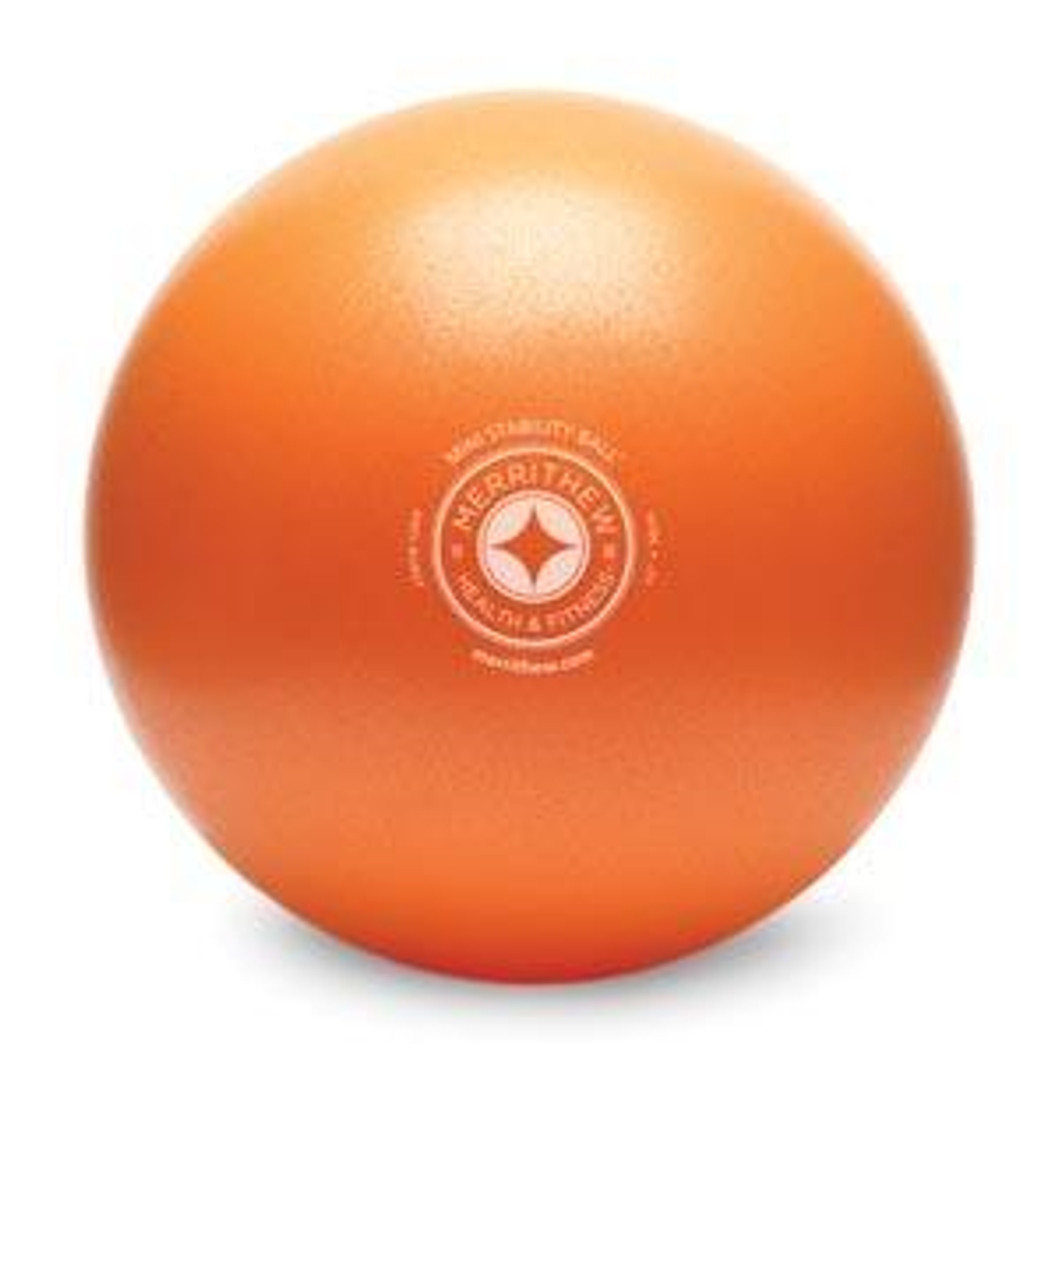  STOTT PILATES Mini Stability Ball (Blue), 7.5 Inch